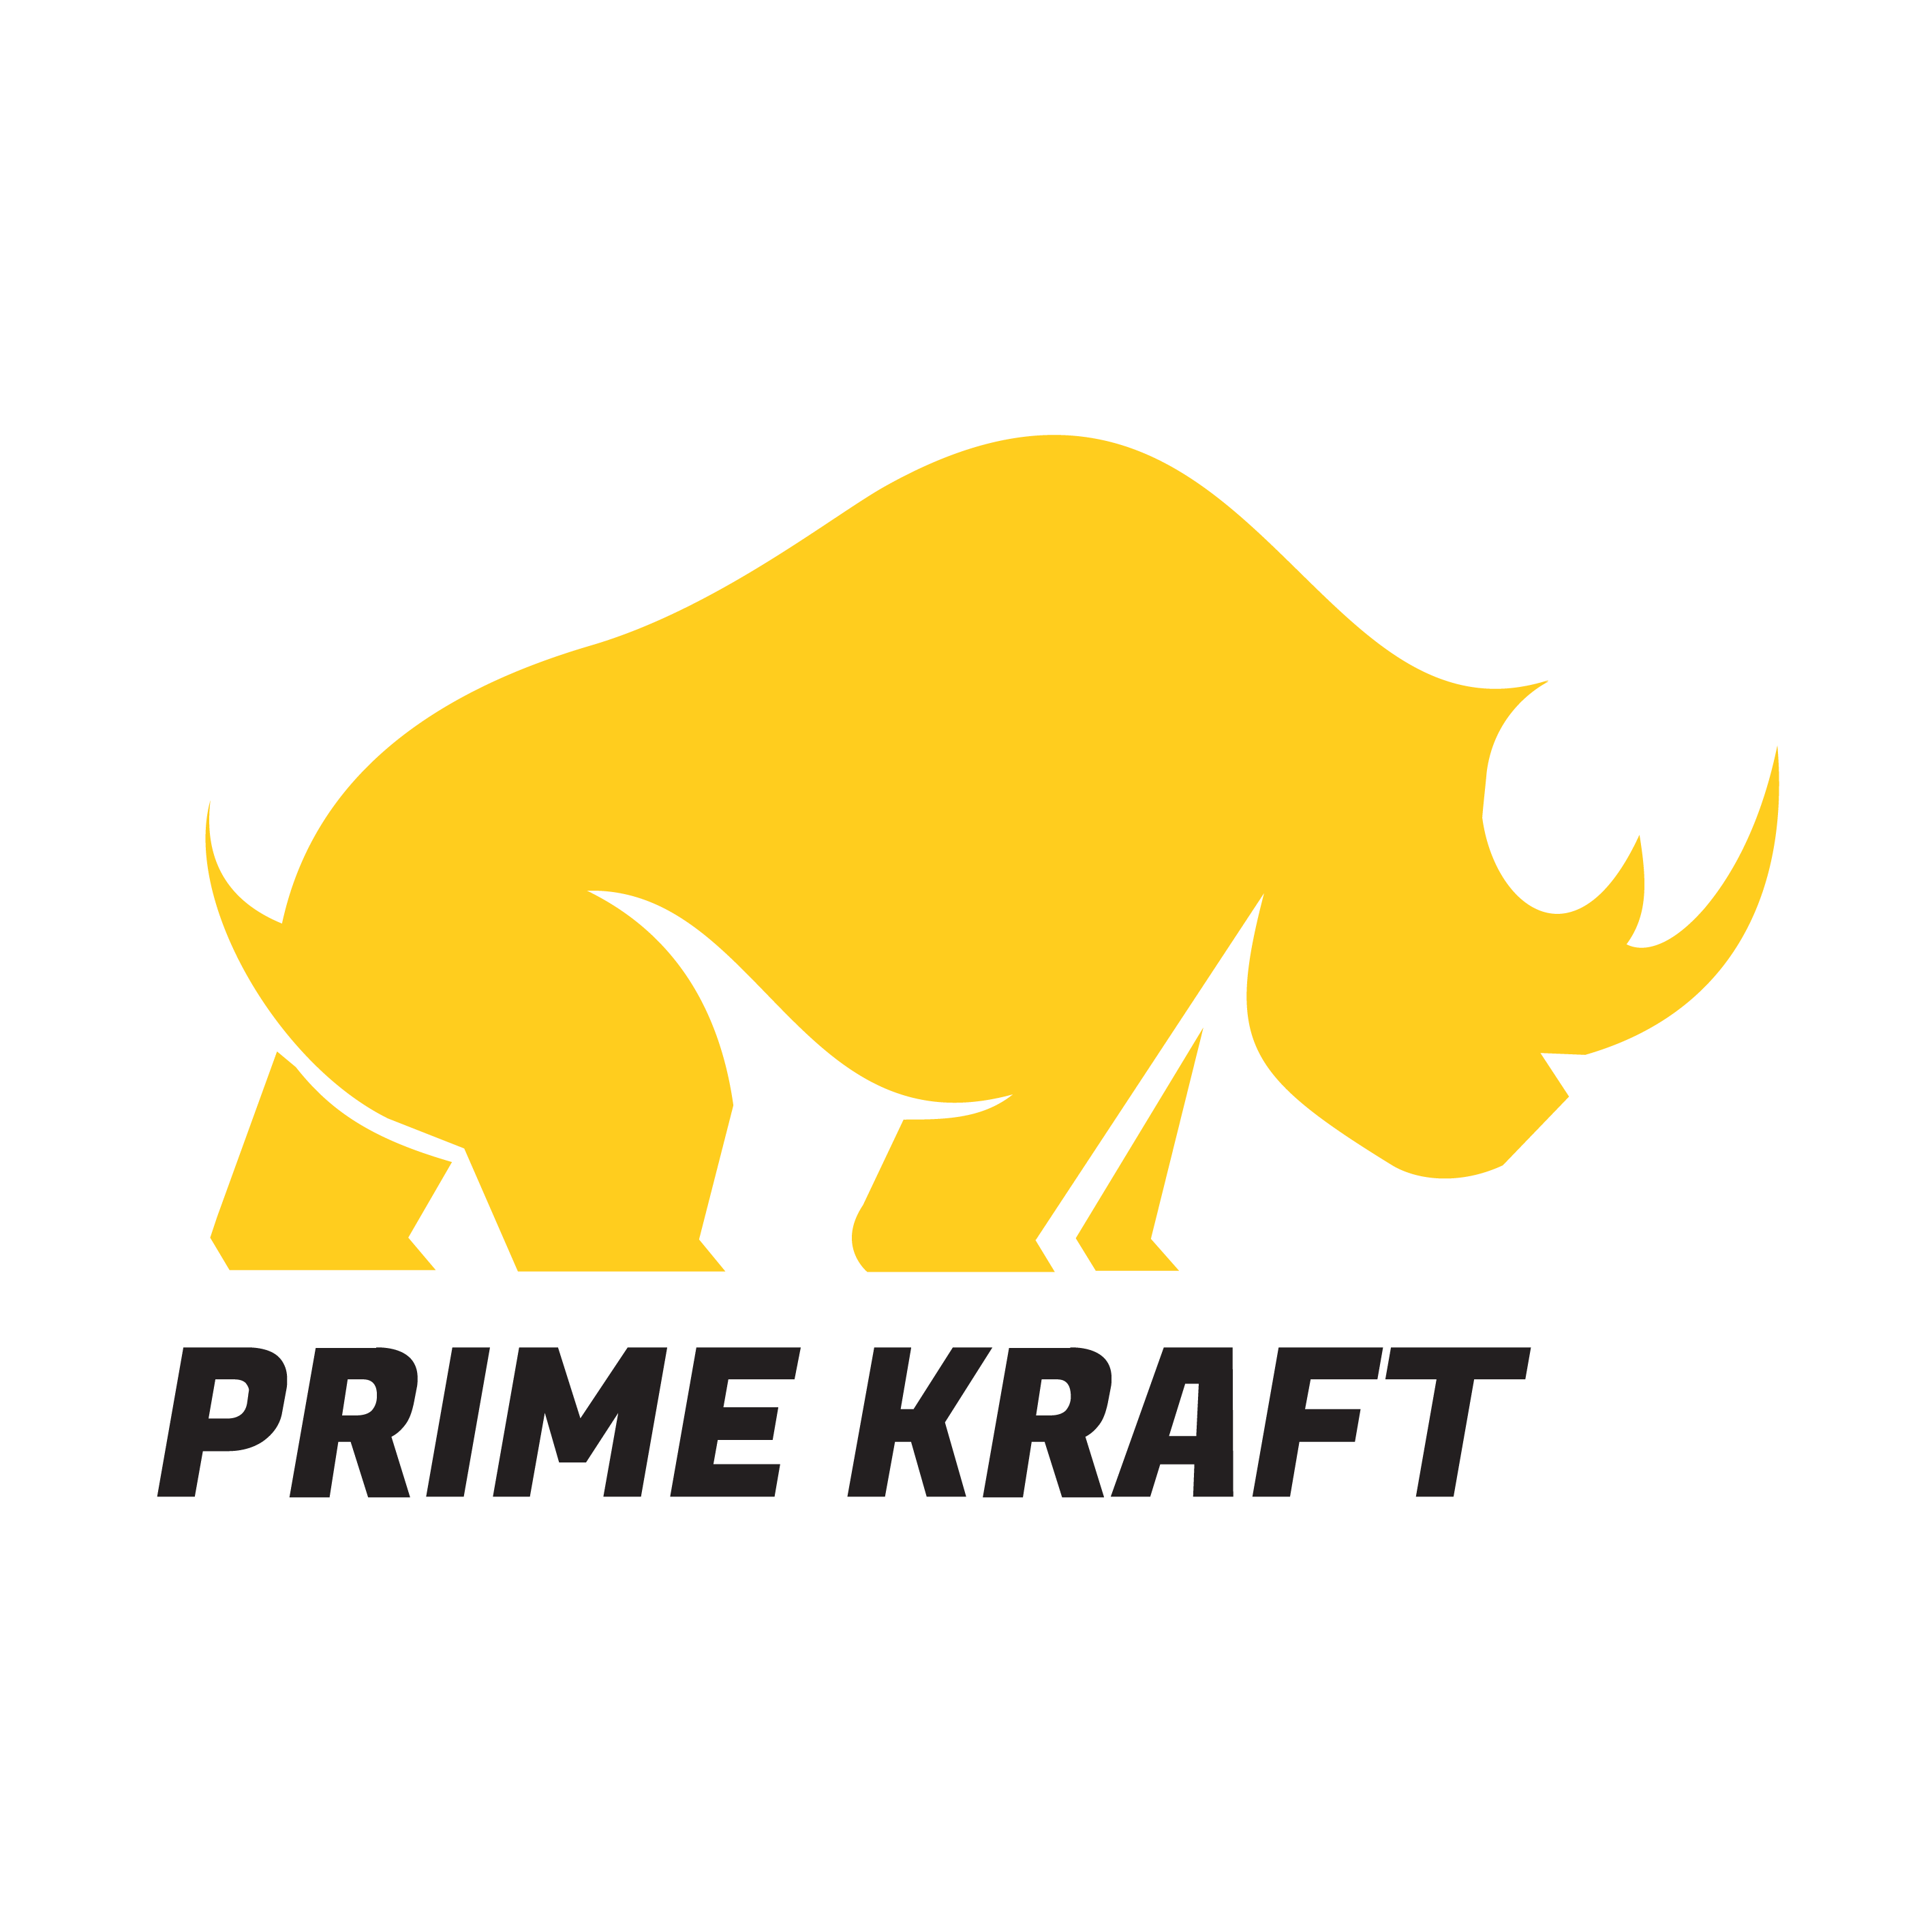 Prime Kraft logo transparent